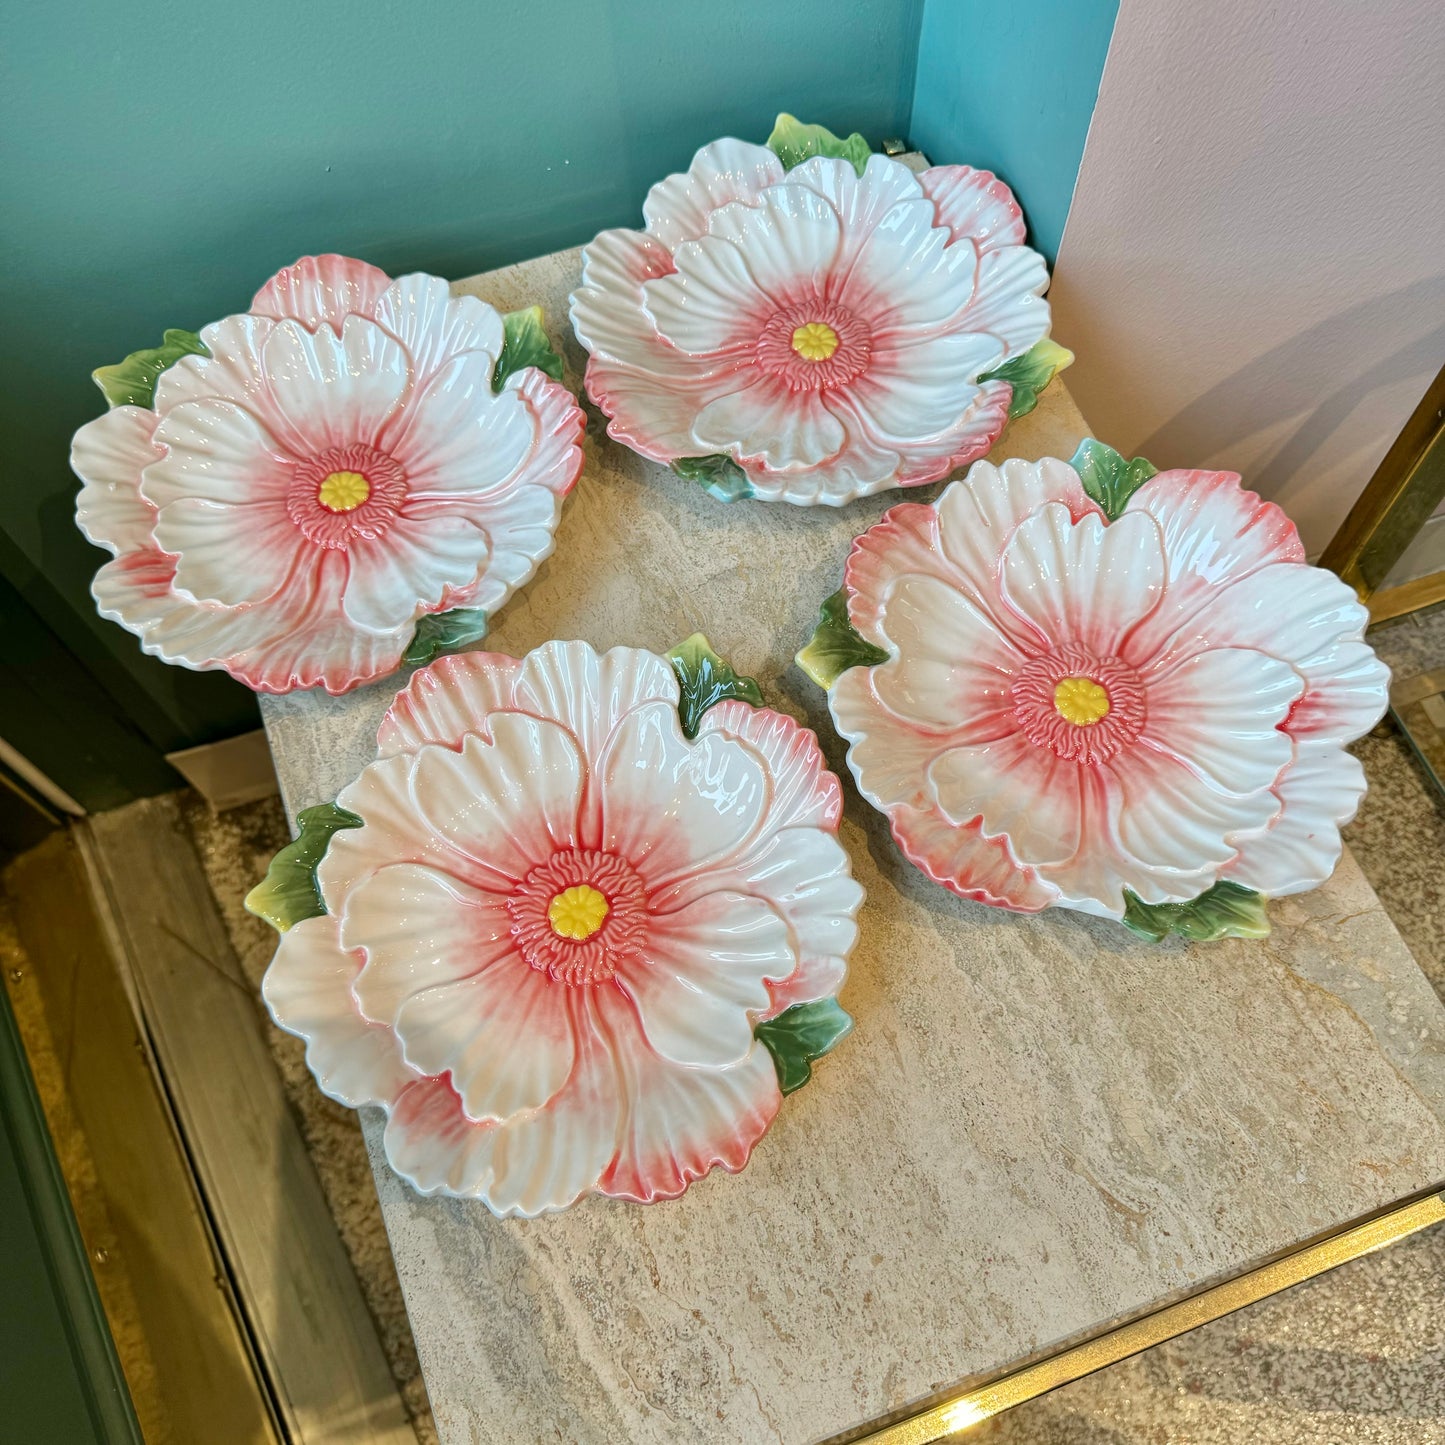 Set of 4 Fitz and Floyd La Fleur Flower Plates